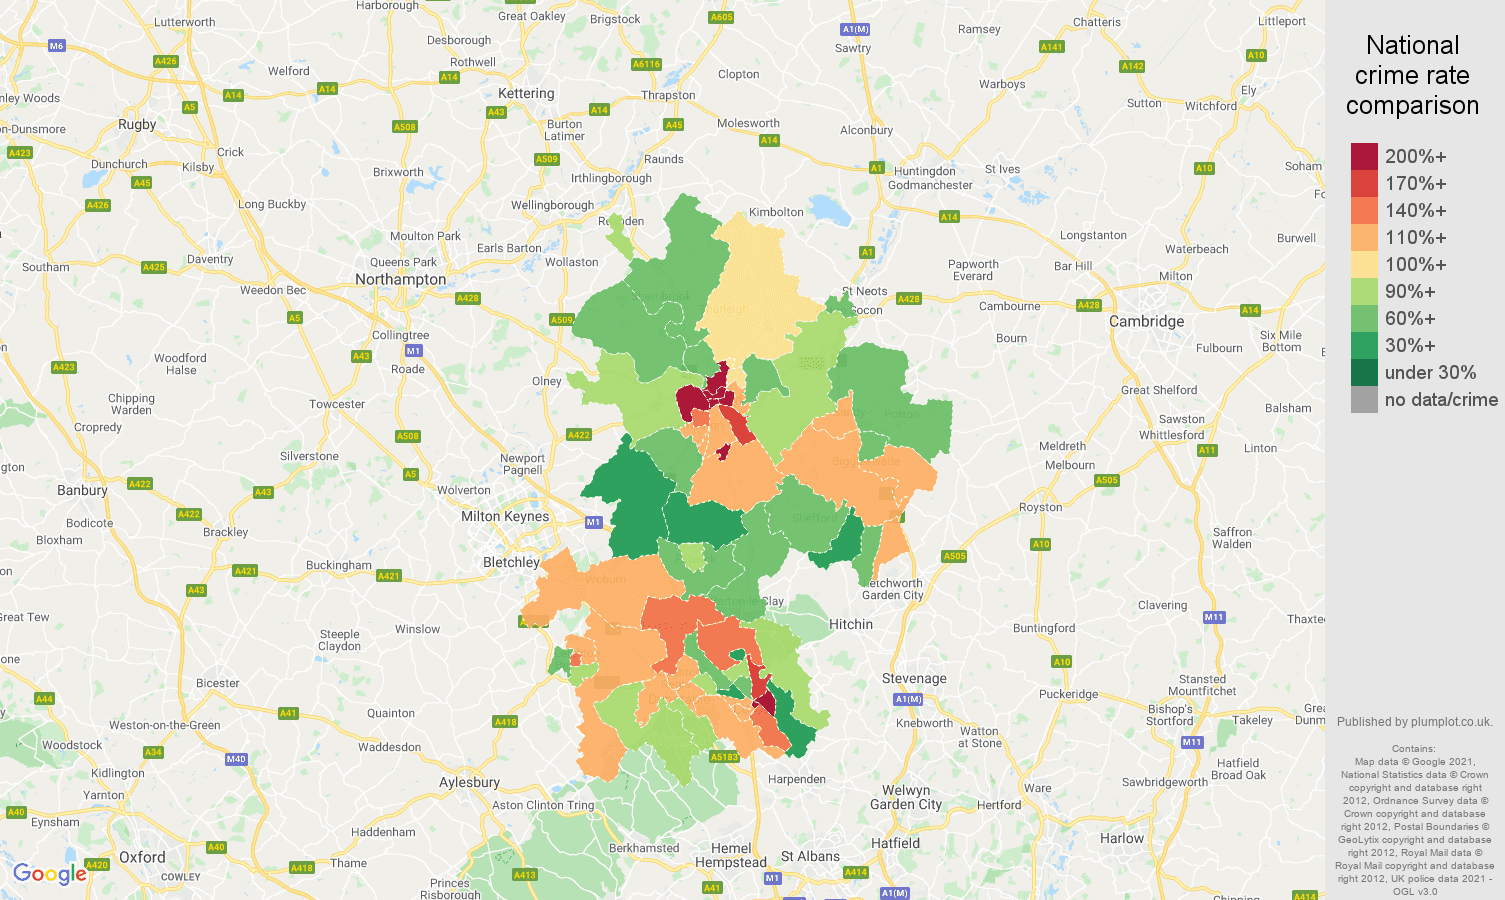 Bedfordshire burglary crime rate comparison map